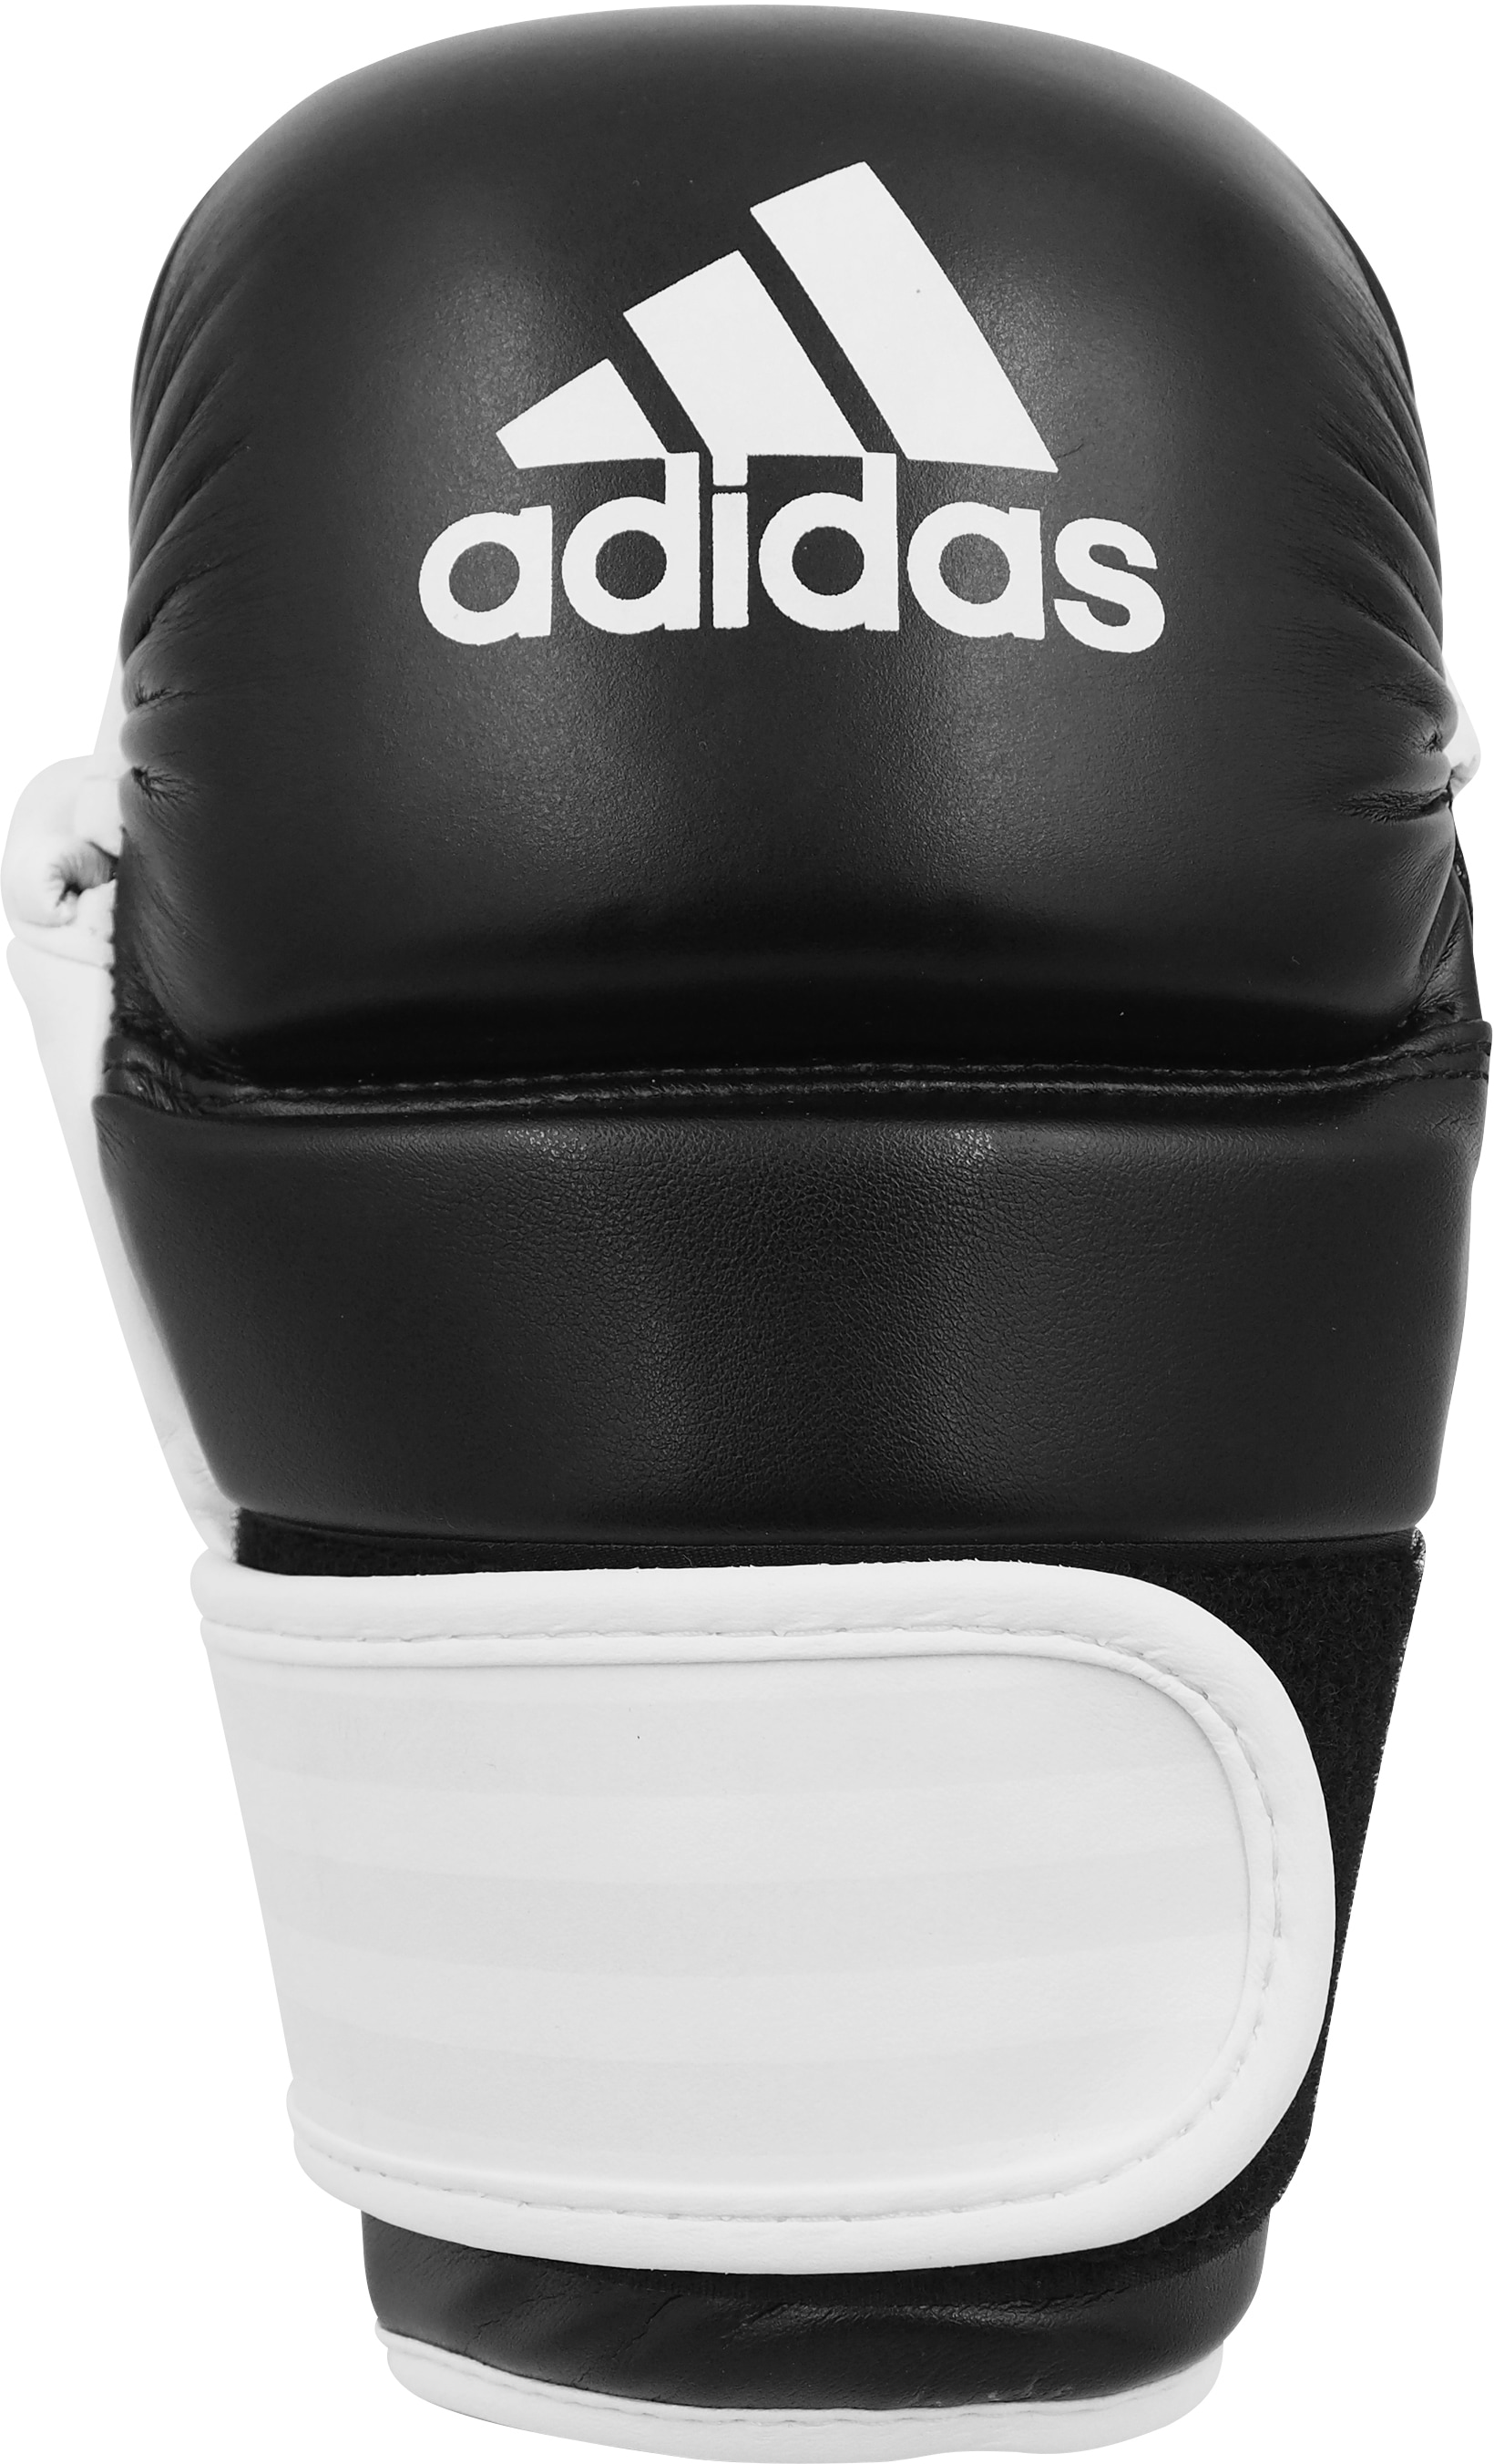 Entdecke adidas Performance »Training Grappling Cloves« auf MMA-Handschuhe